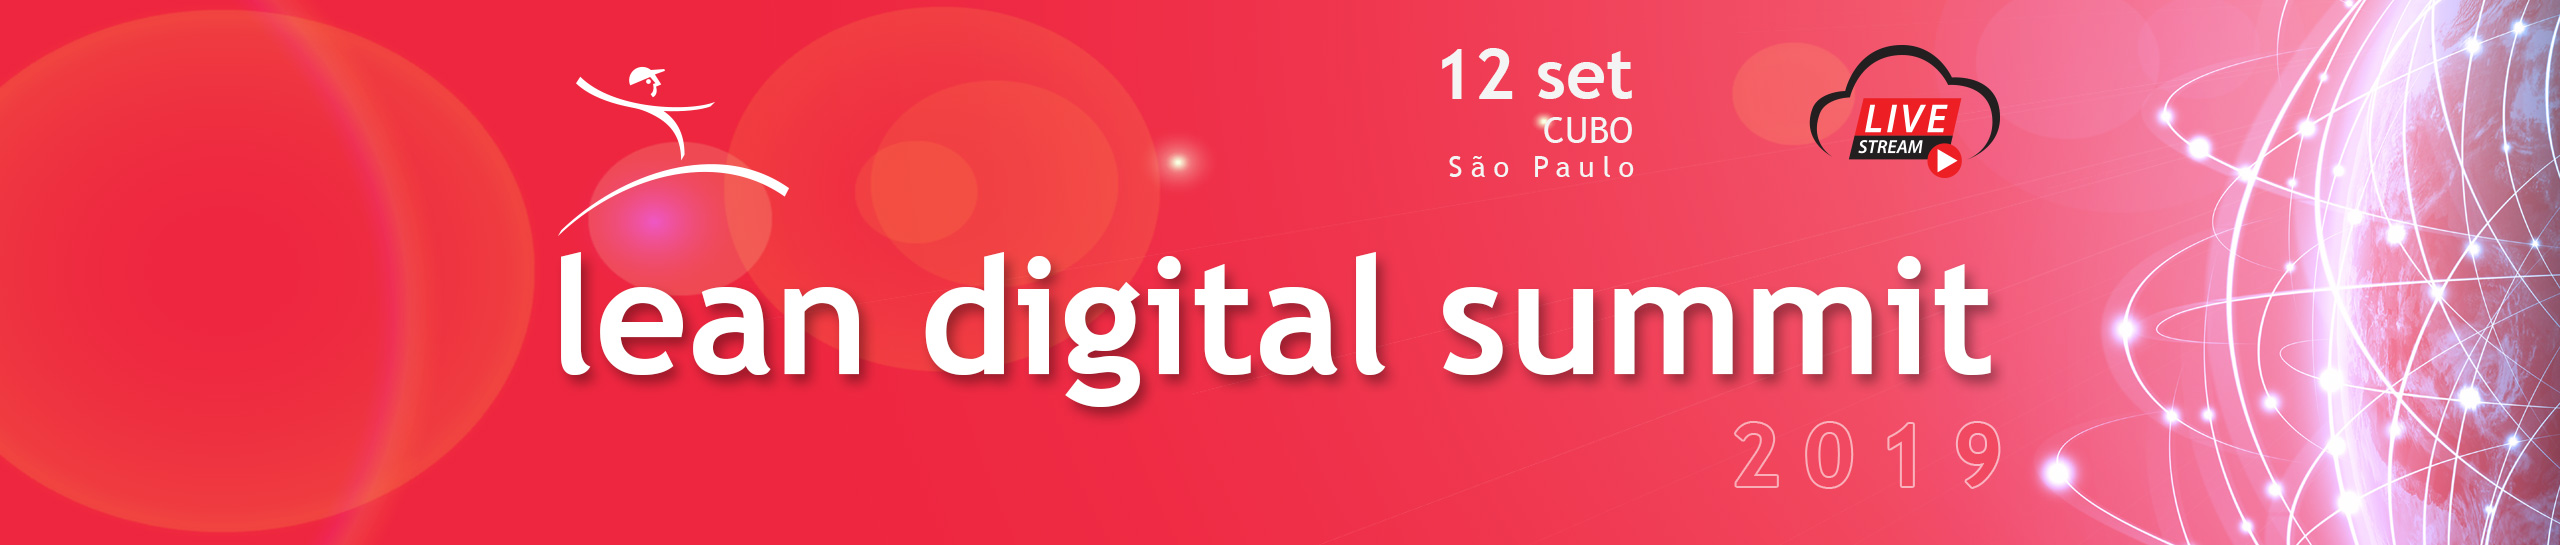 Lean Digital Summit 2019